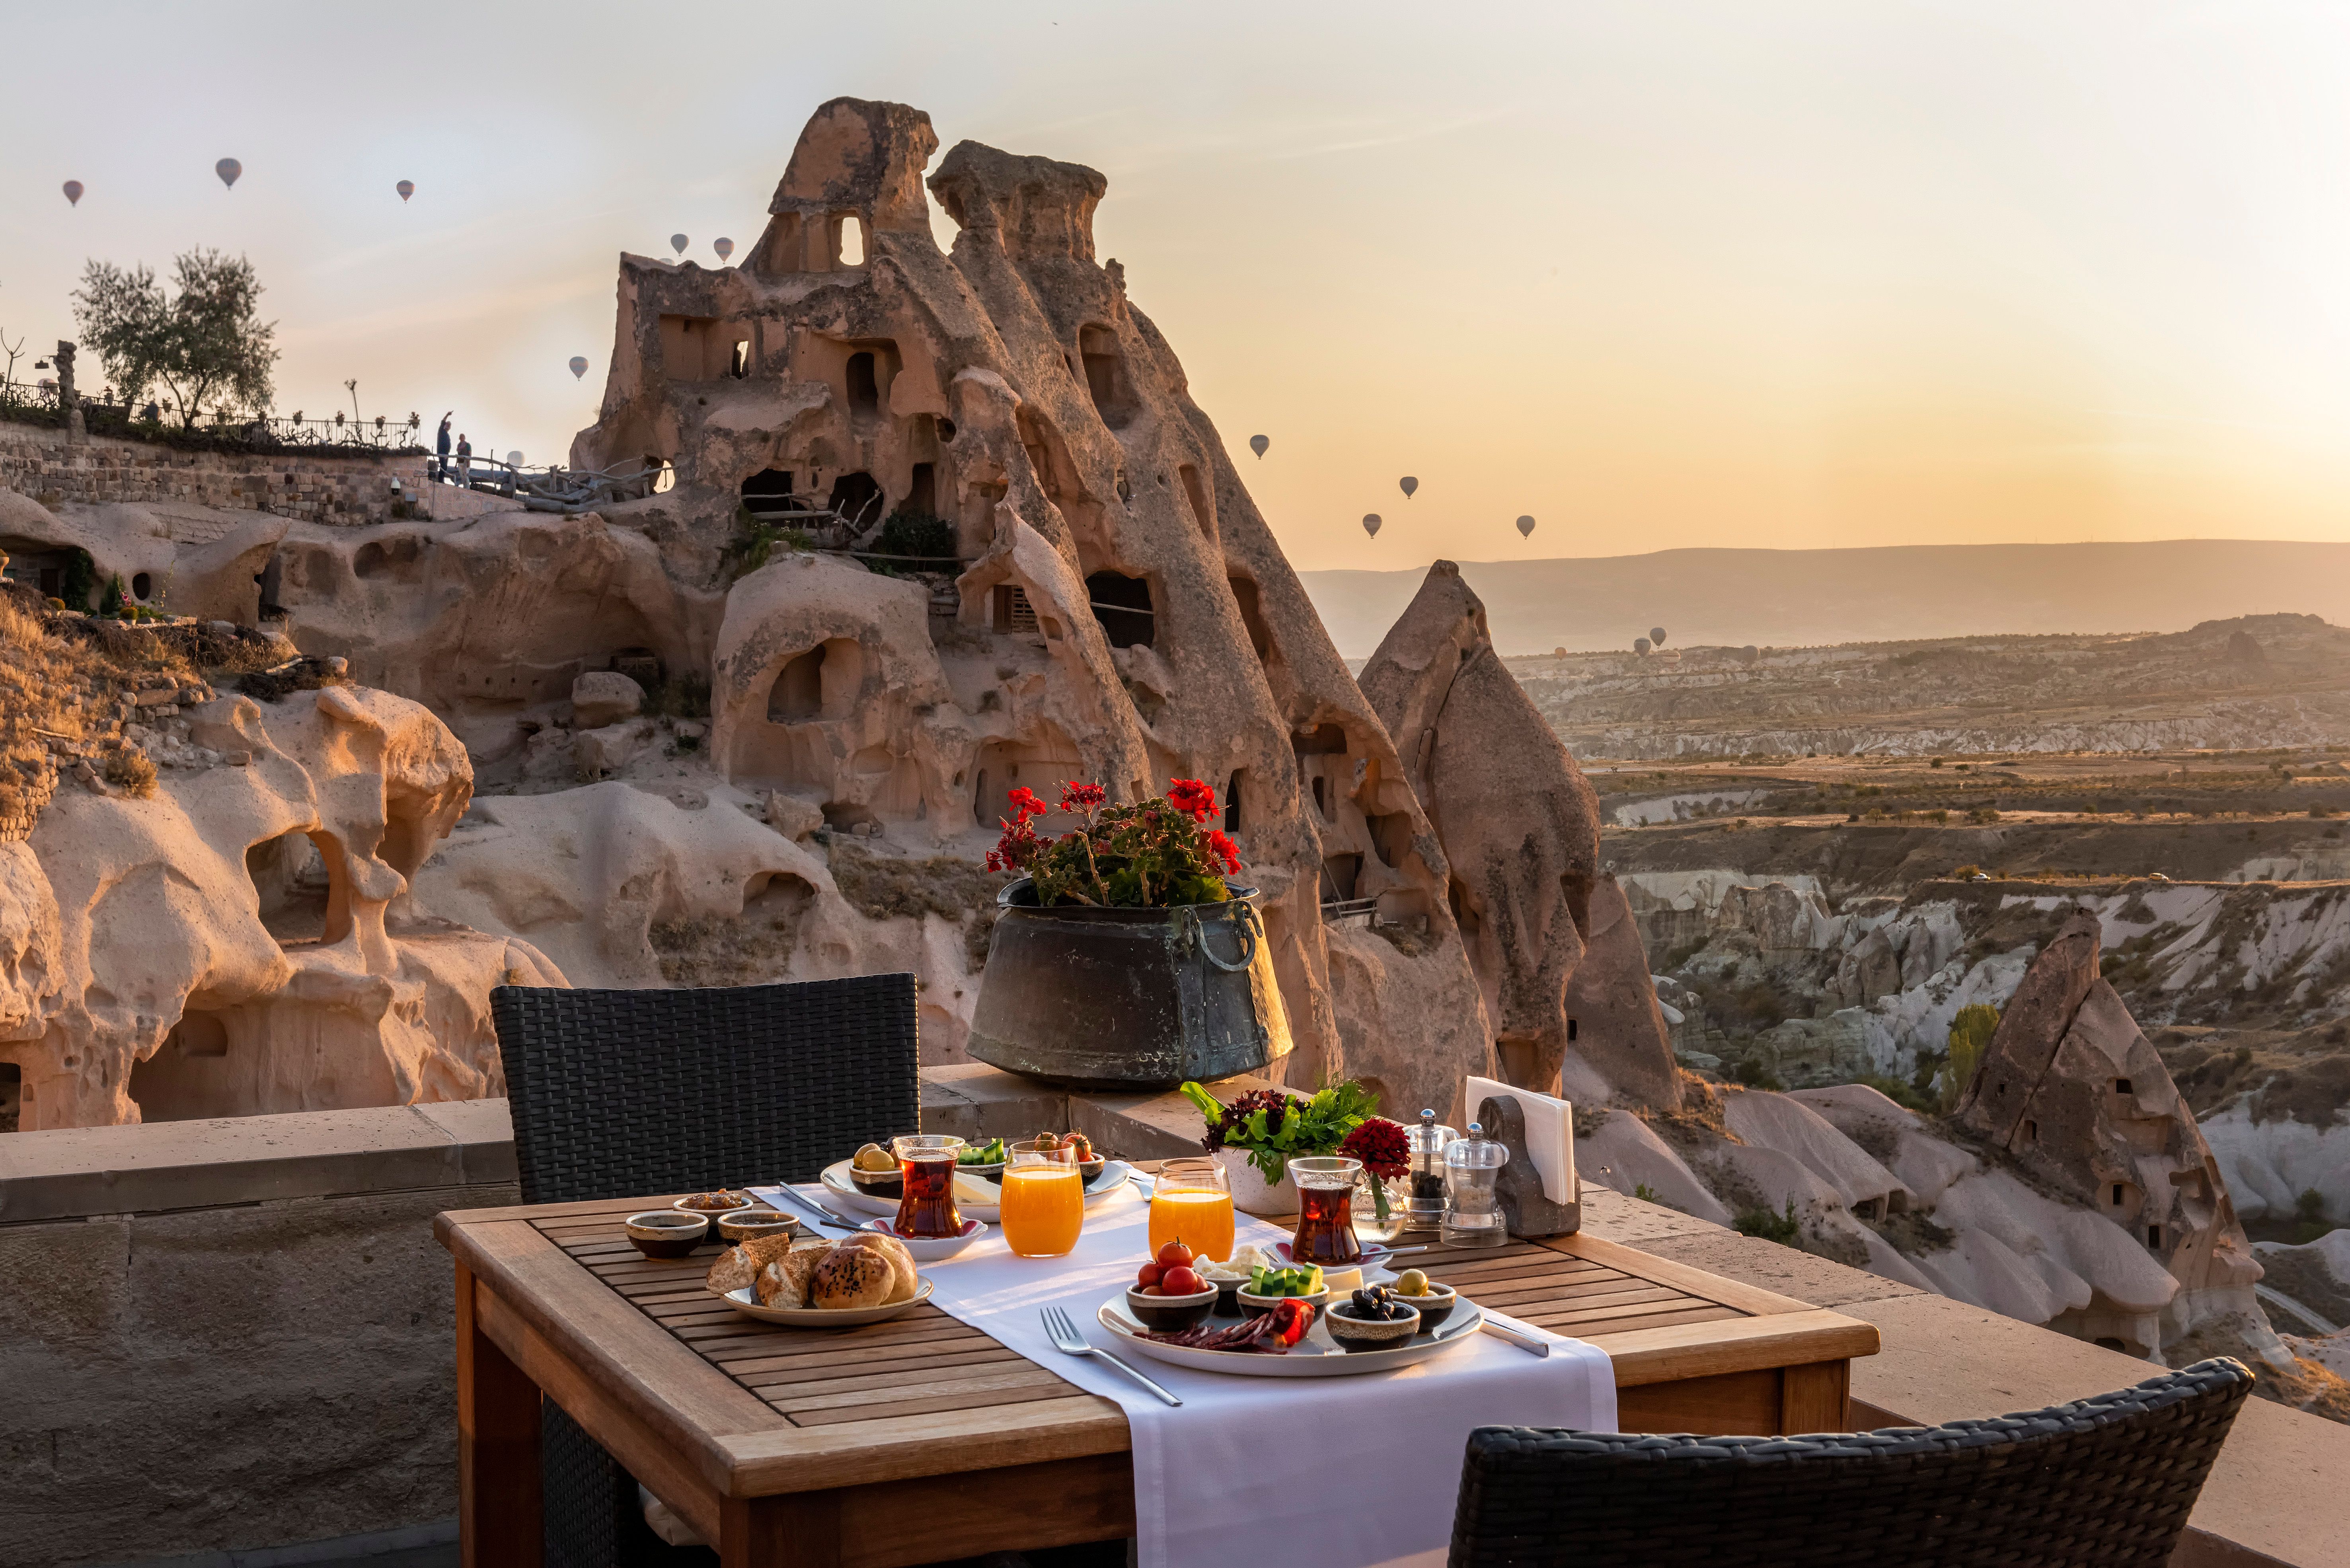 Breakfast at the Argos in Cappadocia